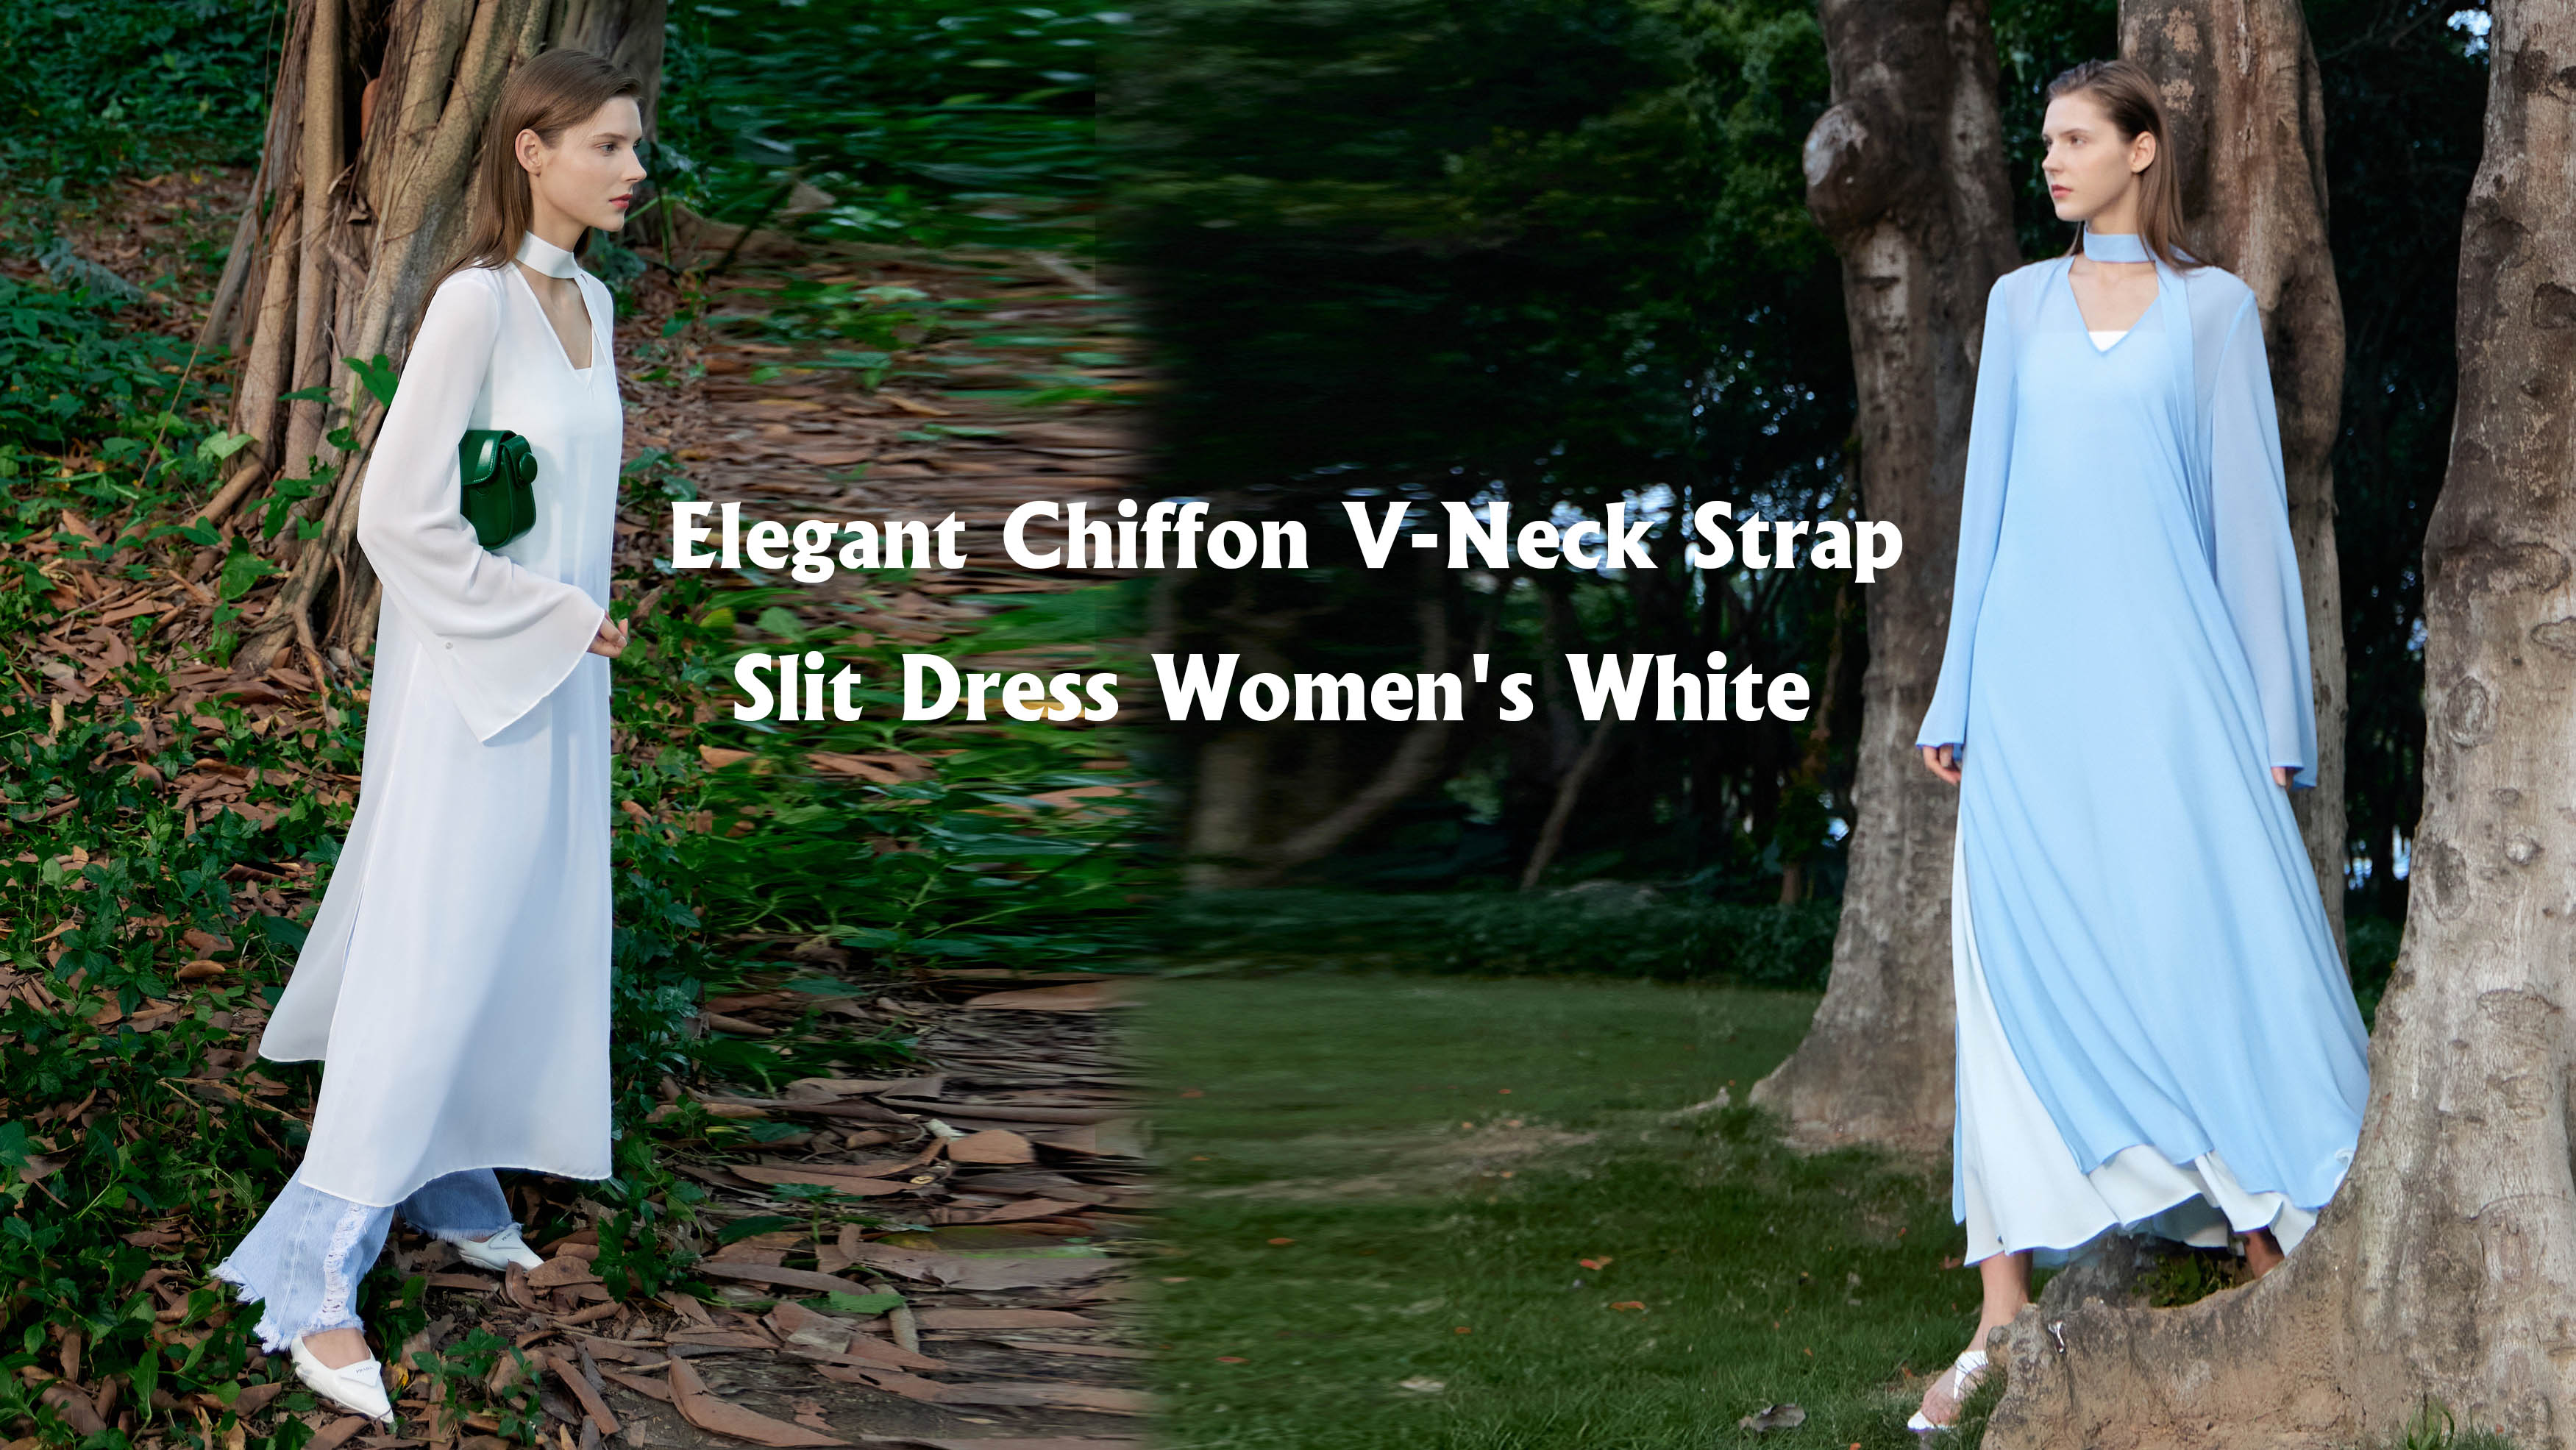 Paling Elegant Chiffon V-neck Tali Irisan Dress Wanita Supplier Putih